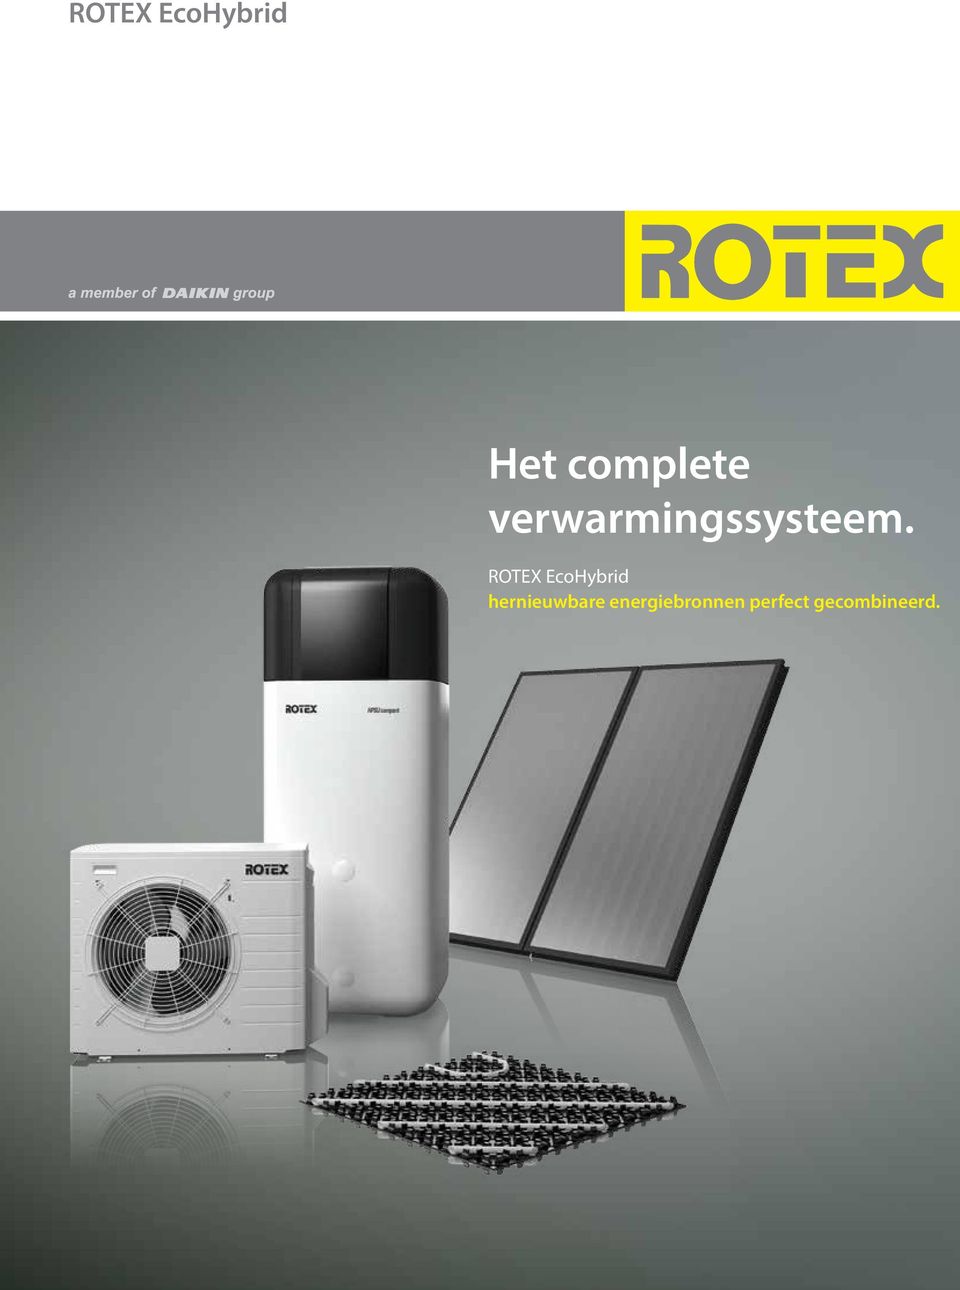 ROTEX EcoHybrid hernieuwbare